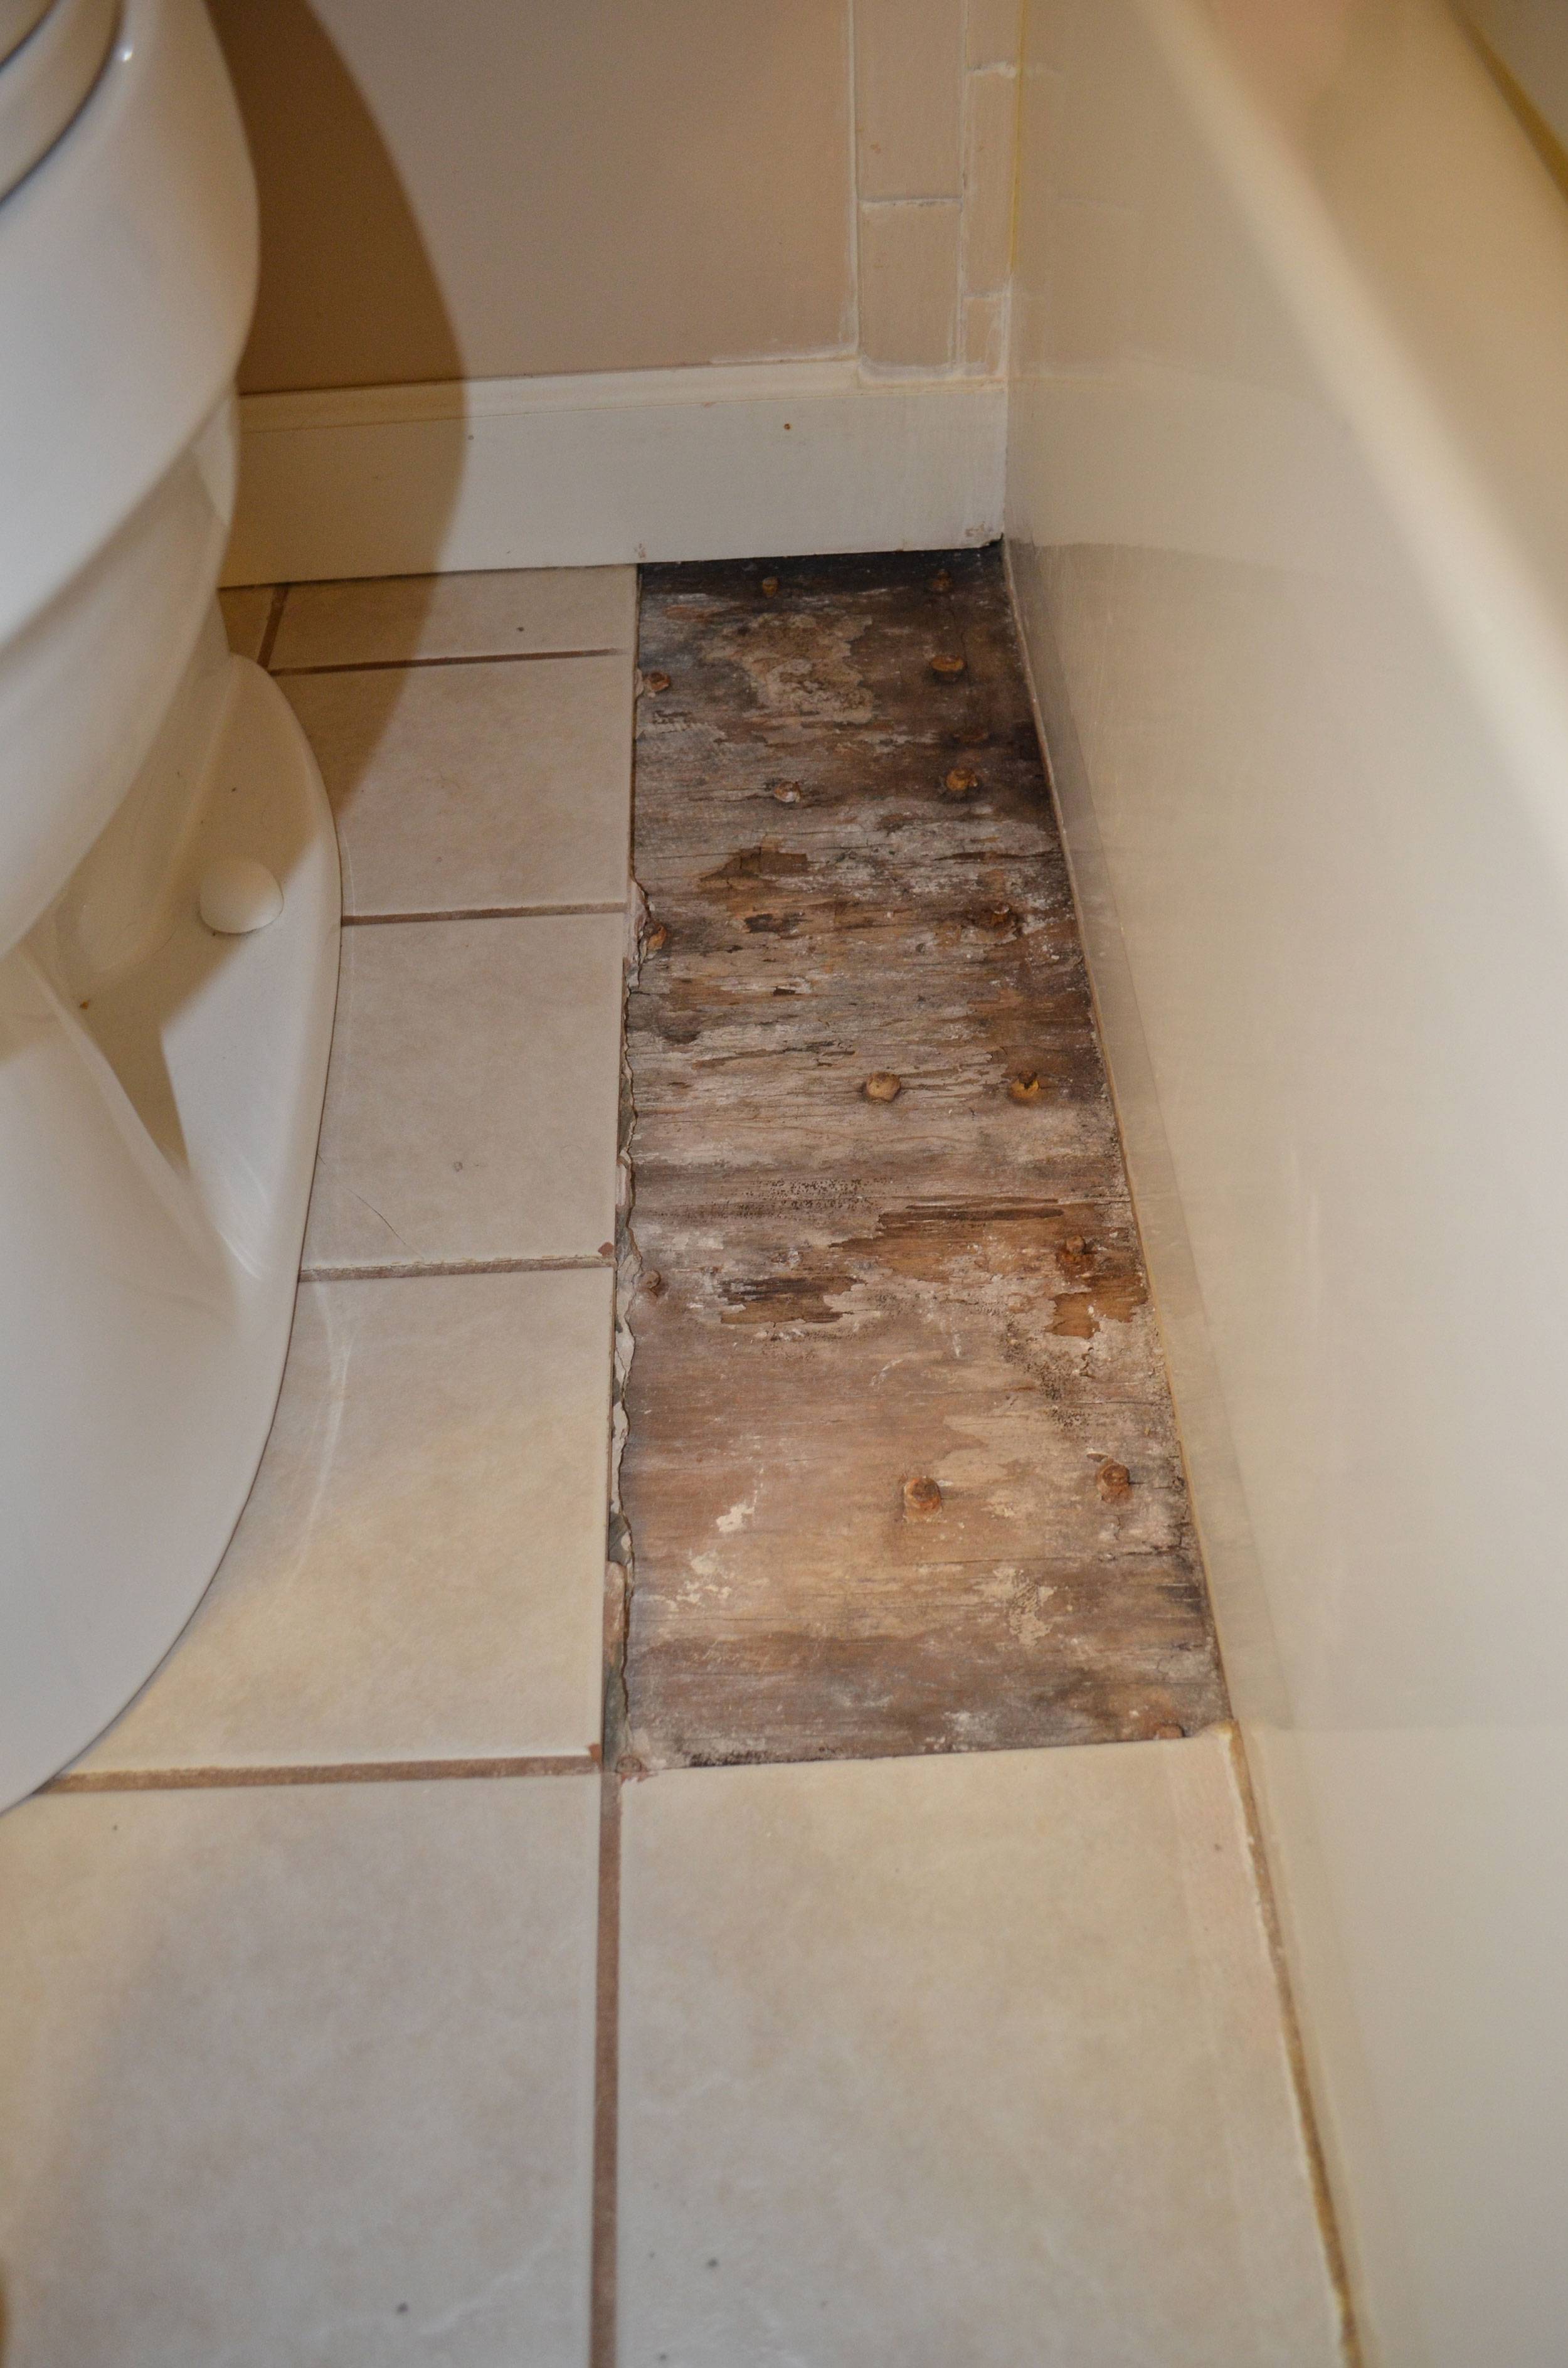 img/fixing-bathroom-tile-floor.jpg